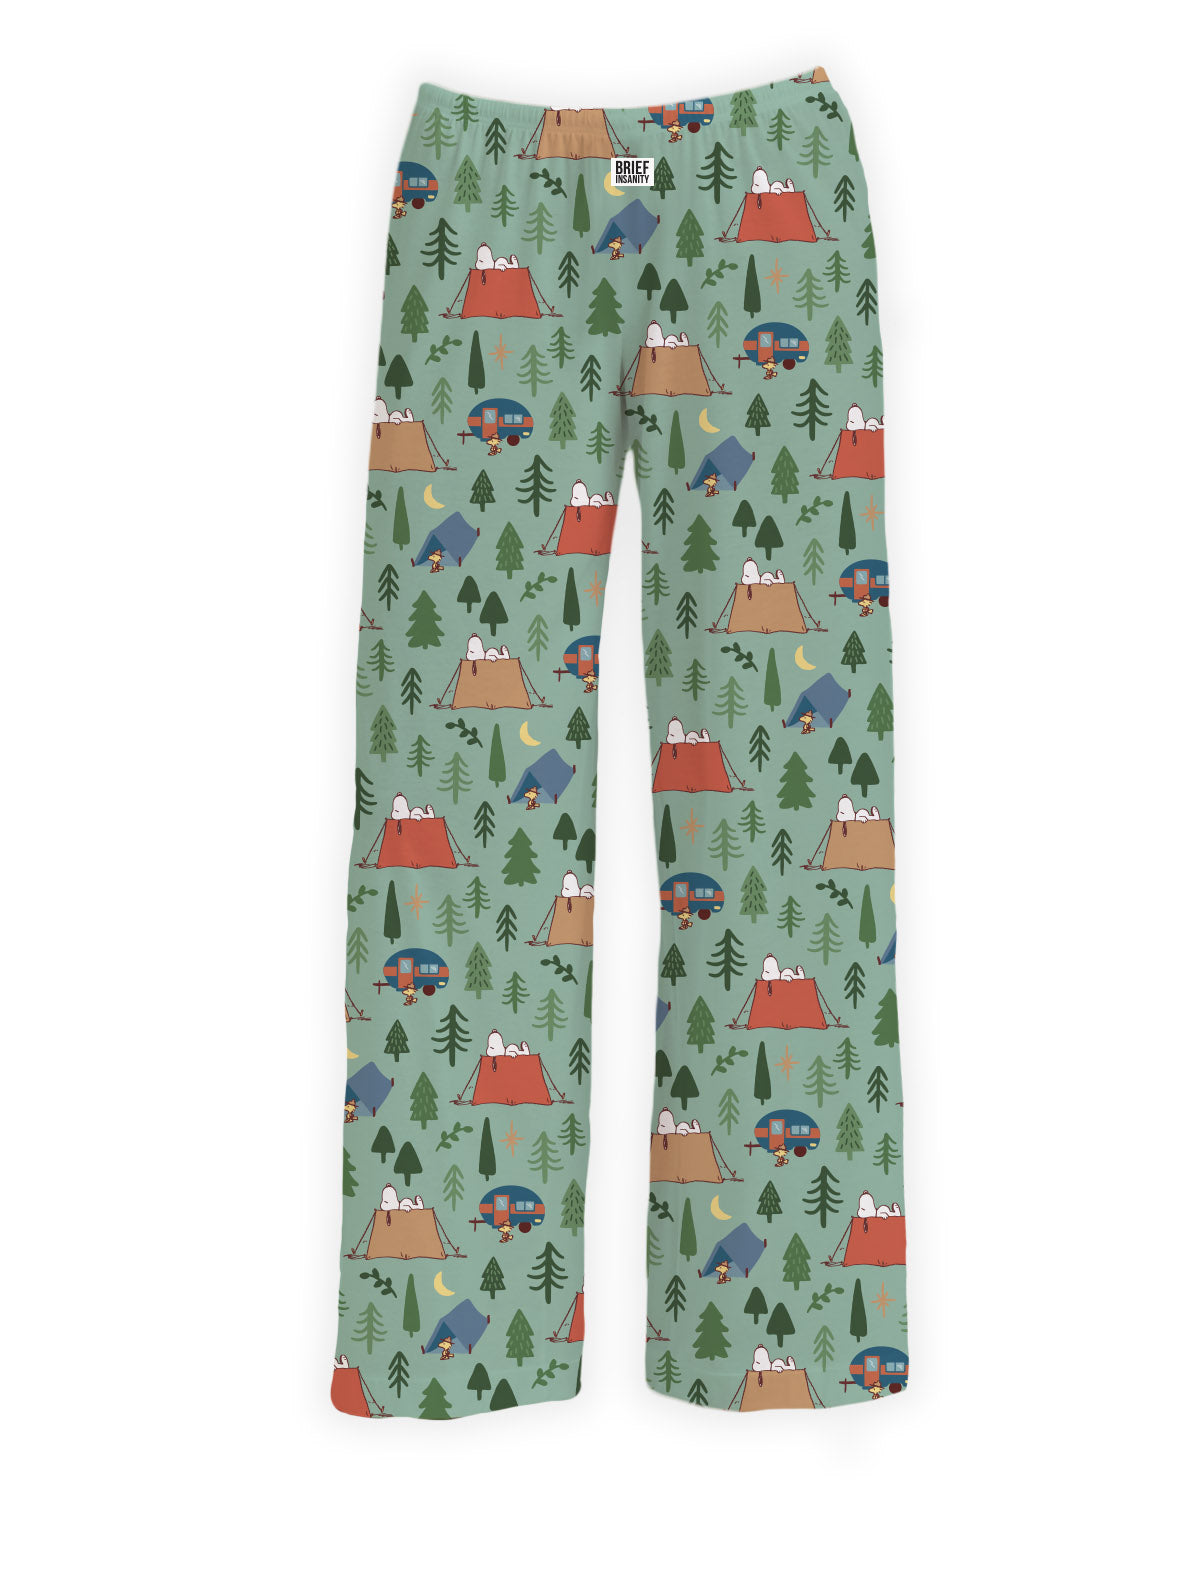 BRIEF INSANITY Snoopy Camping Pattern Pajama Lounge Pants